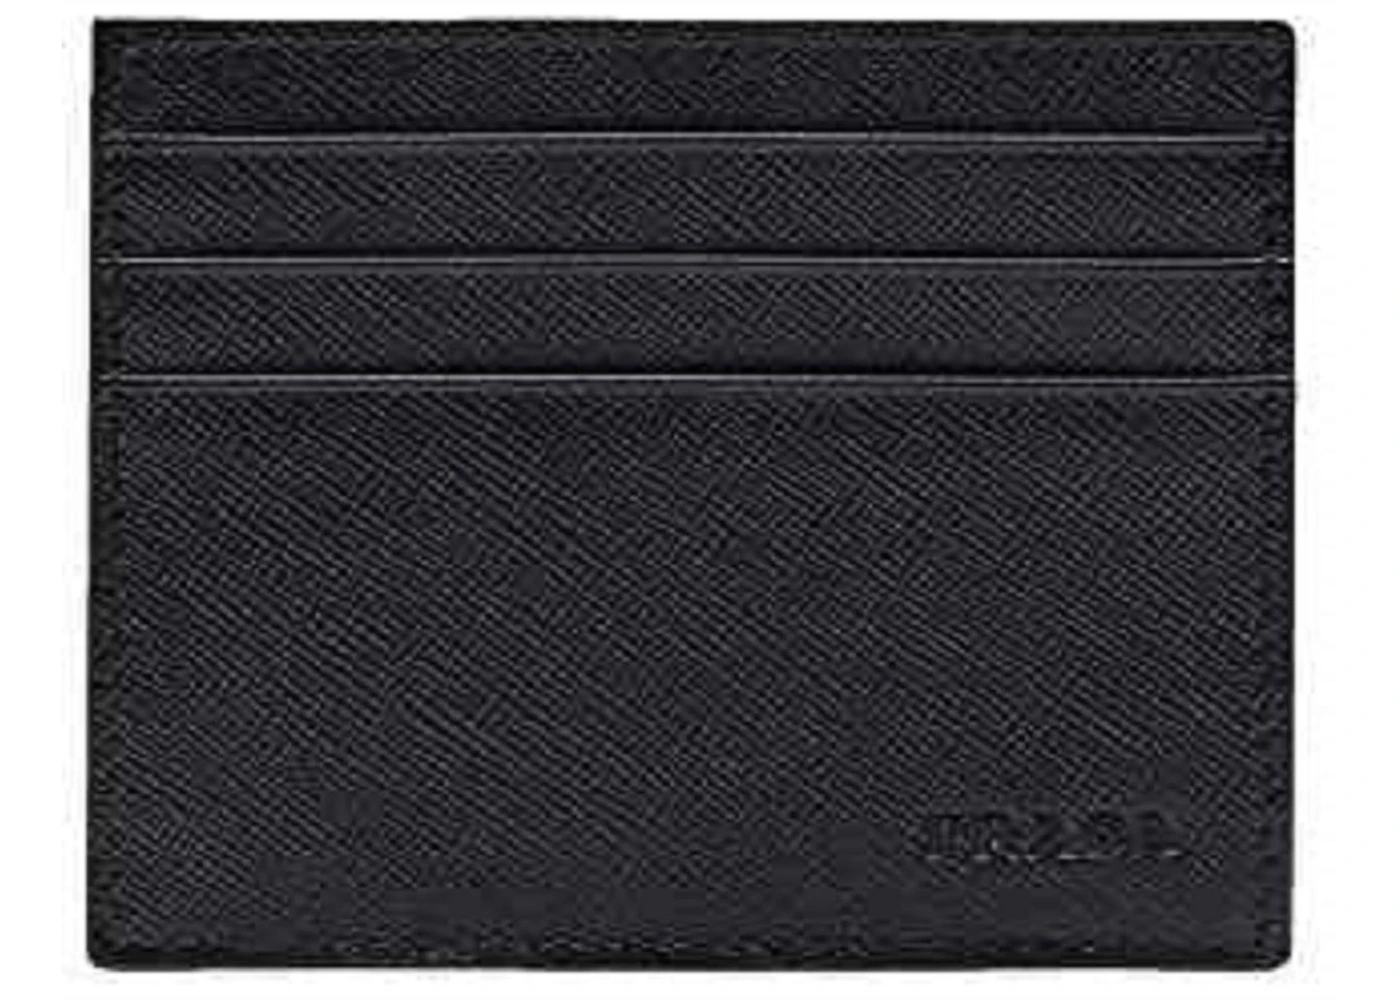 Prada Mercuio Card Holder Saffiano Black in Leather - US